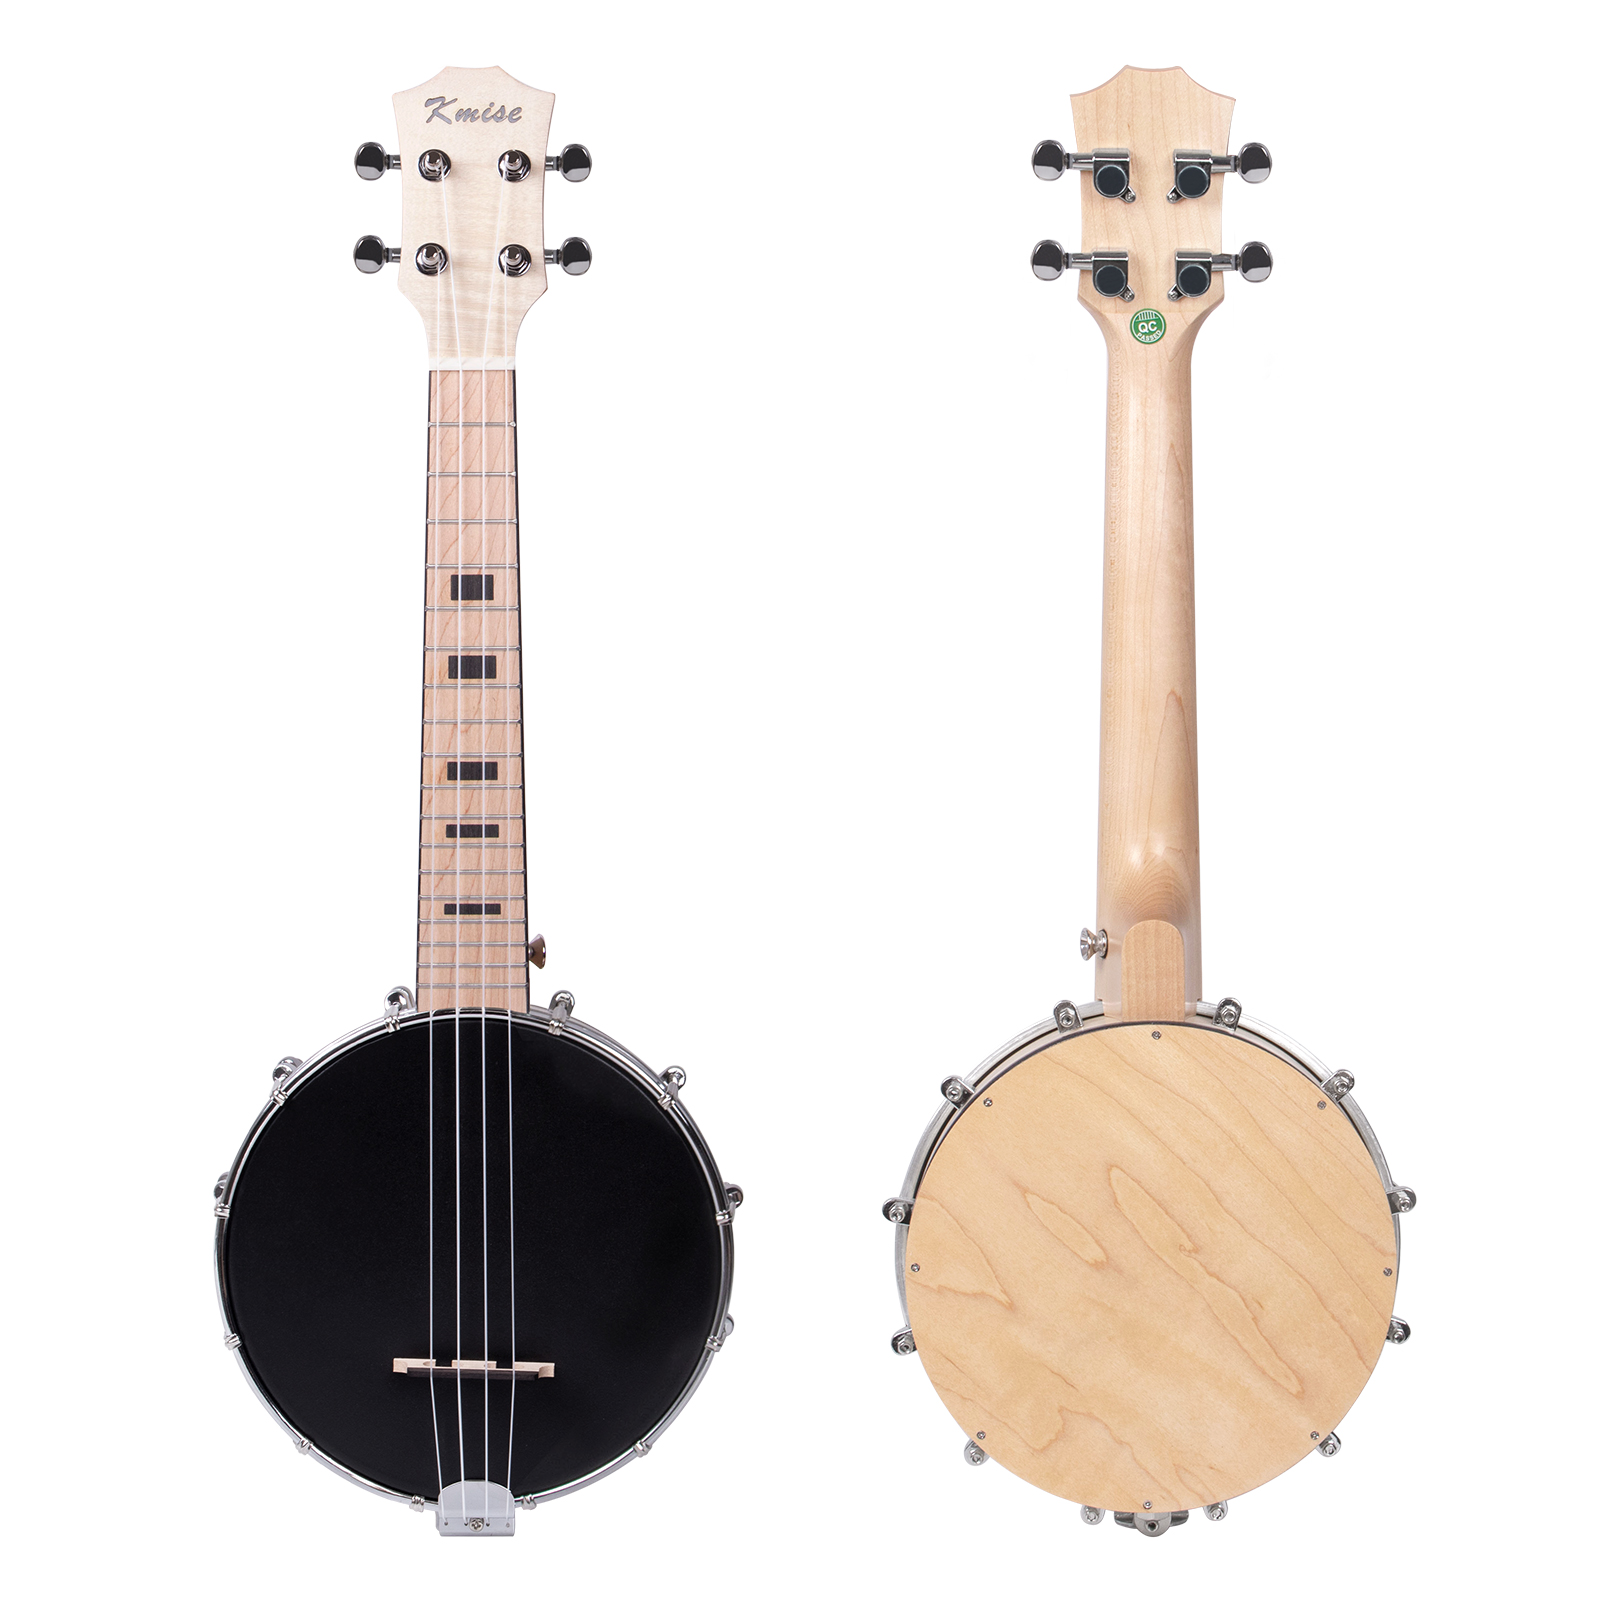 Kmise 4 String Banjo Ukulele Uke Concert 23 Inch Maple Wood 4 String Musical Instruments